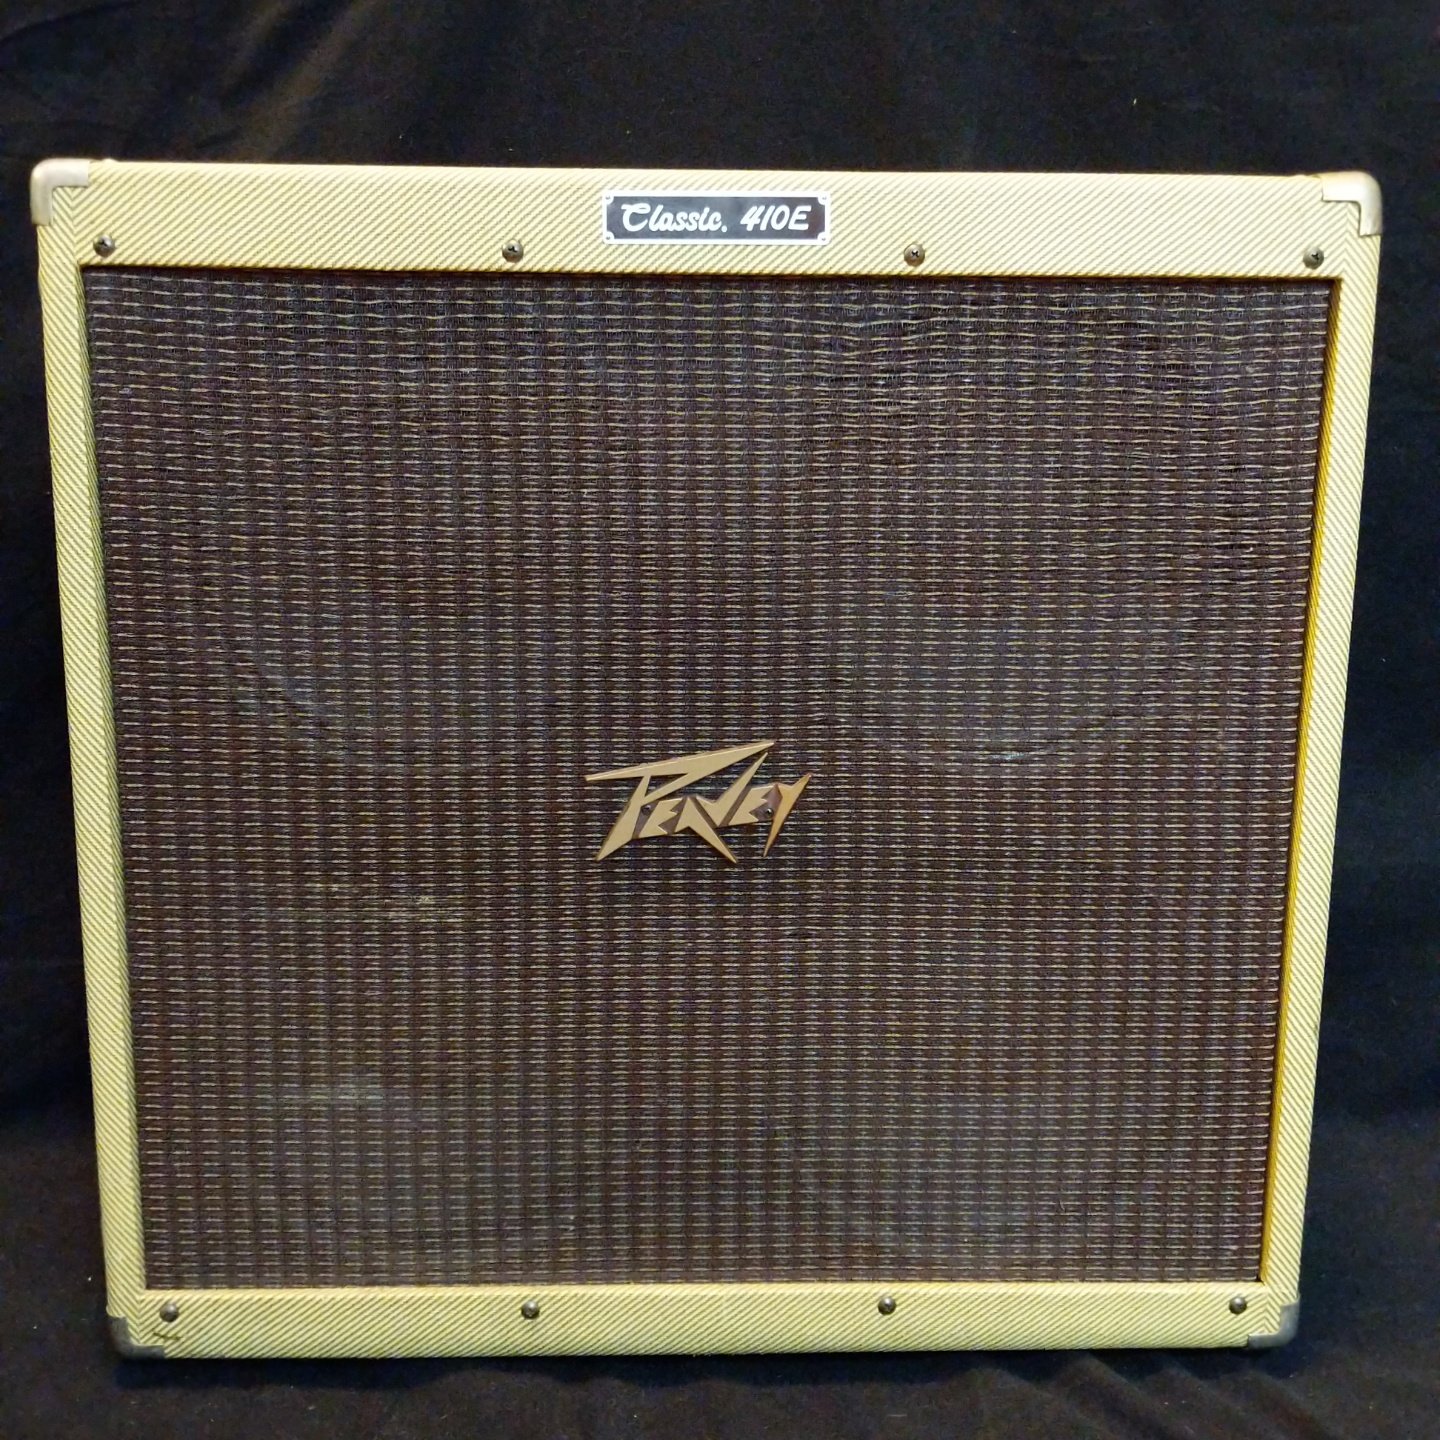 The Peavey Classic 410E 400-watt 4x10 guitar speaker cabinet.